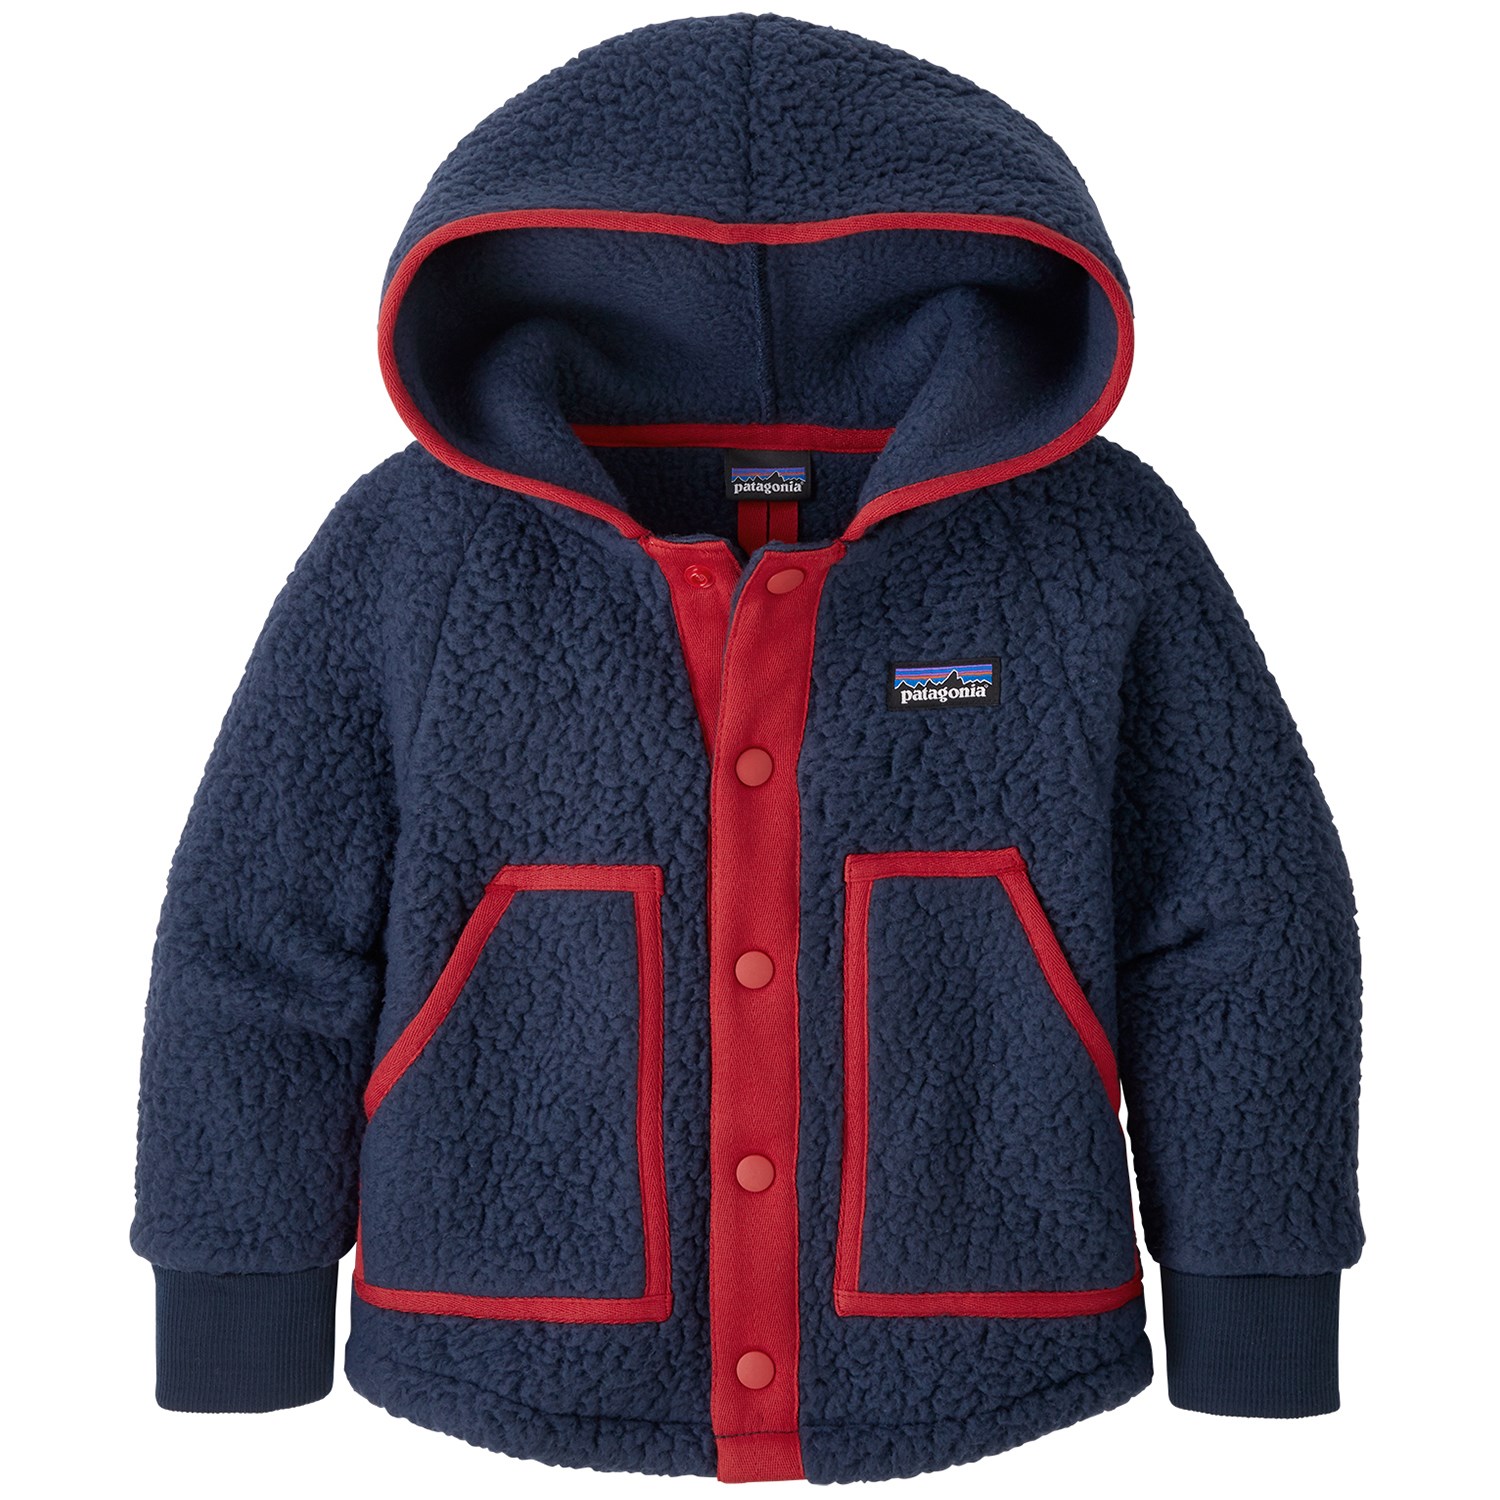 куртка легкая для малышей uniqlo washable zipped темно синий Куртка Patagonia для малышей, темно-синий / красный